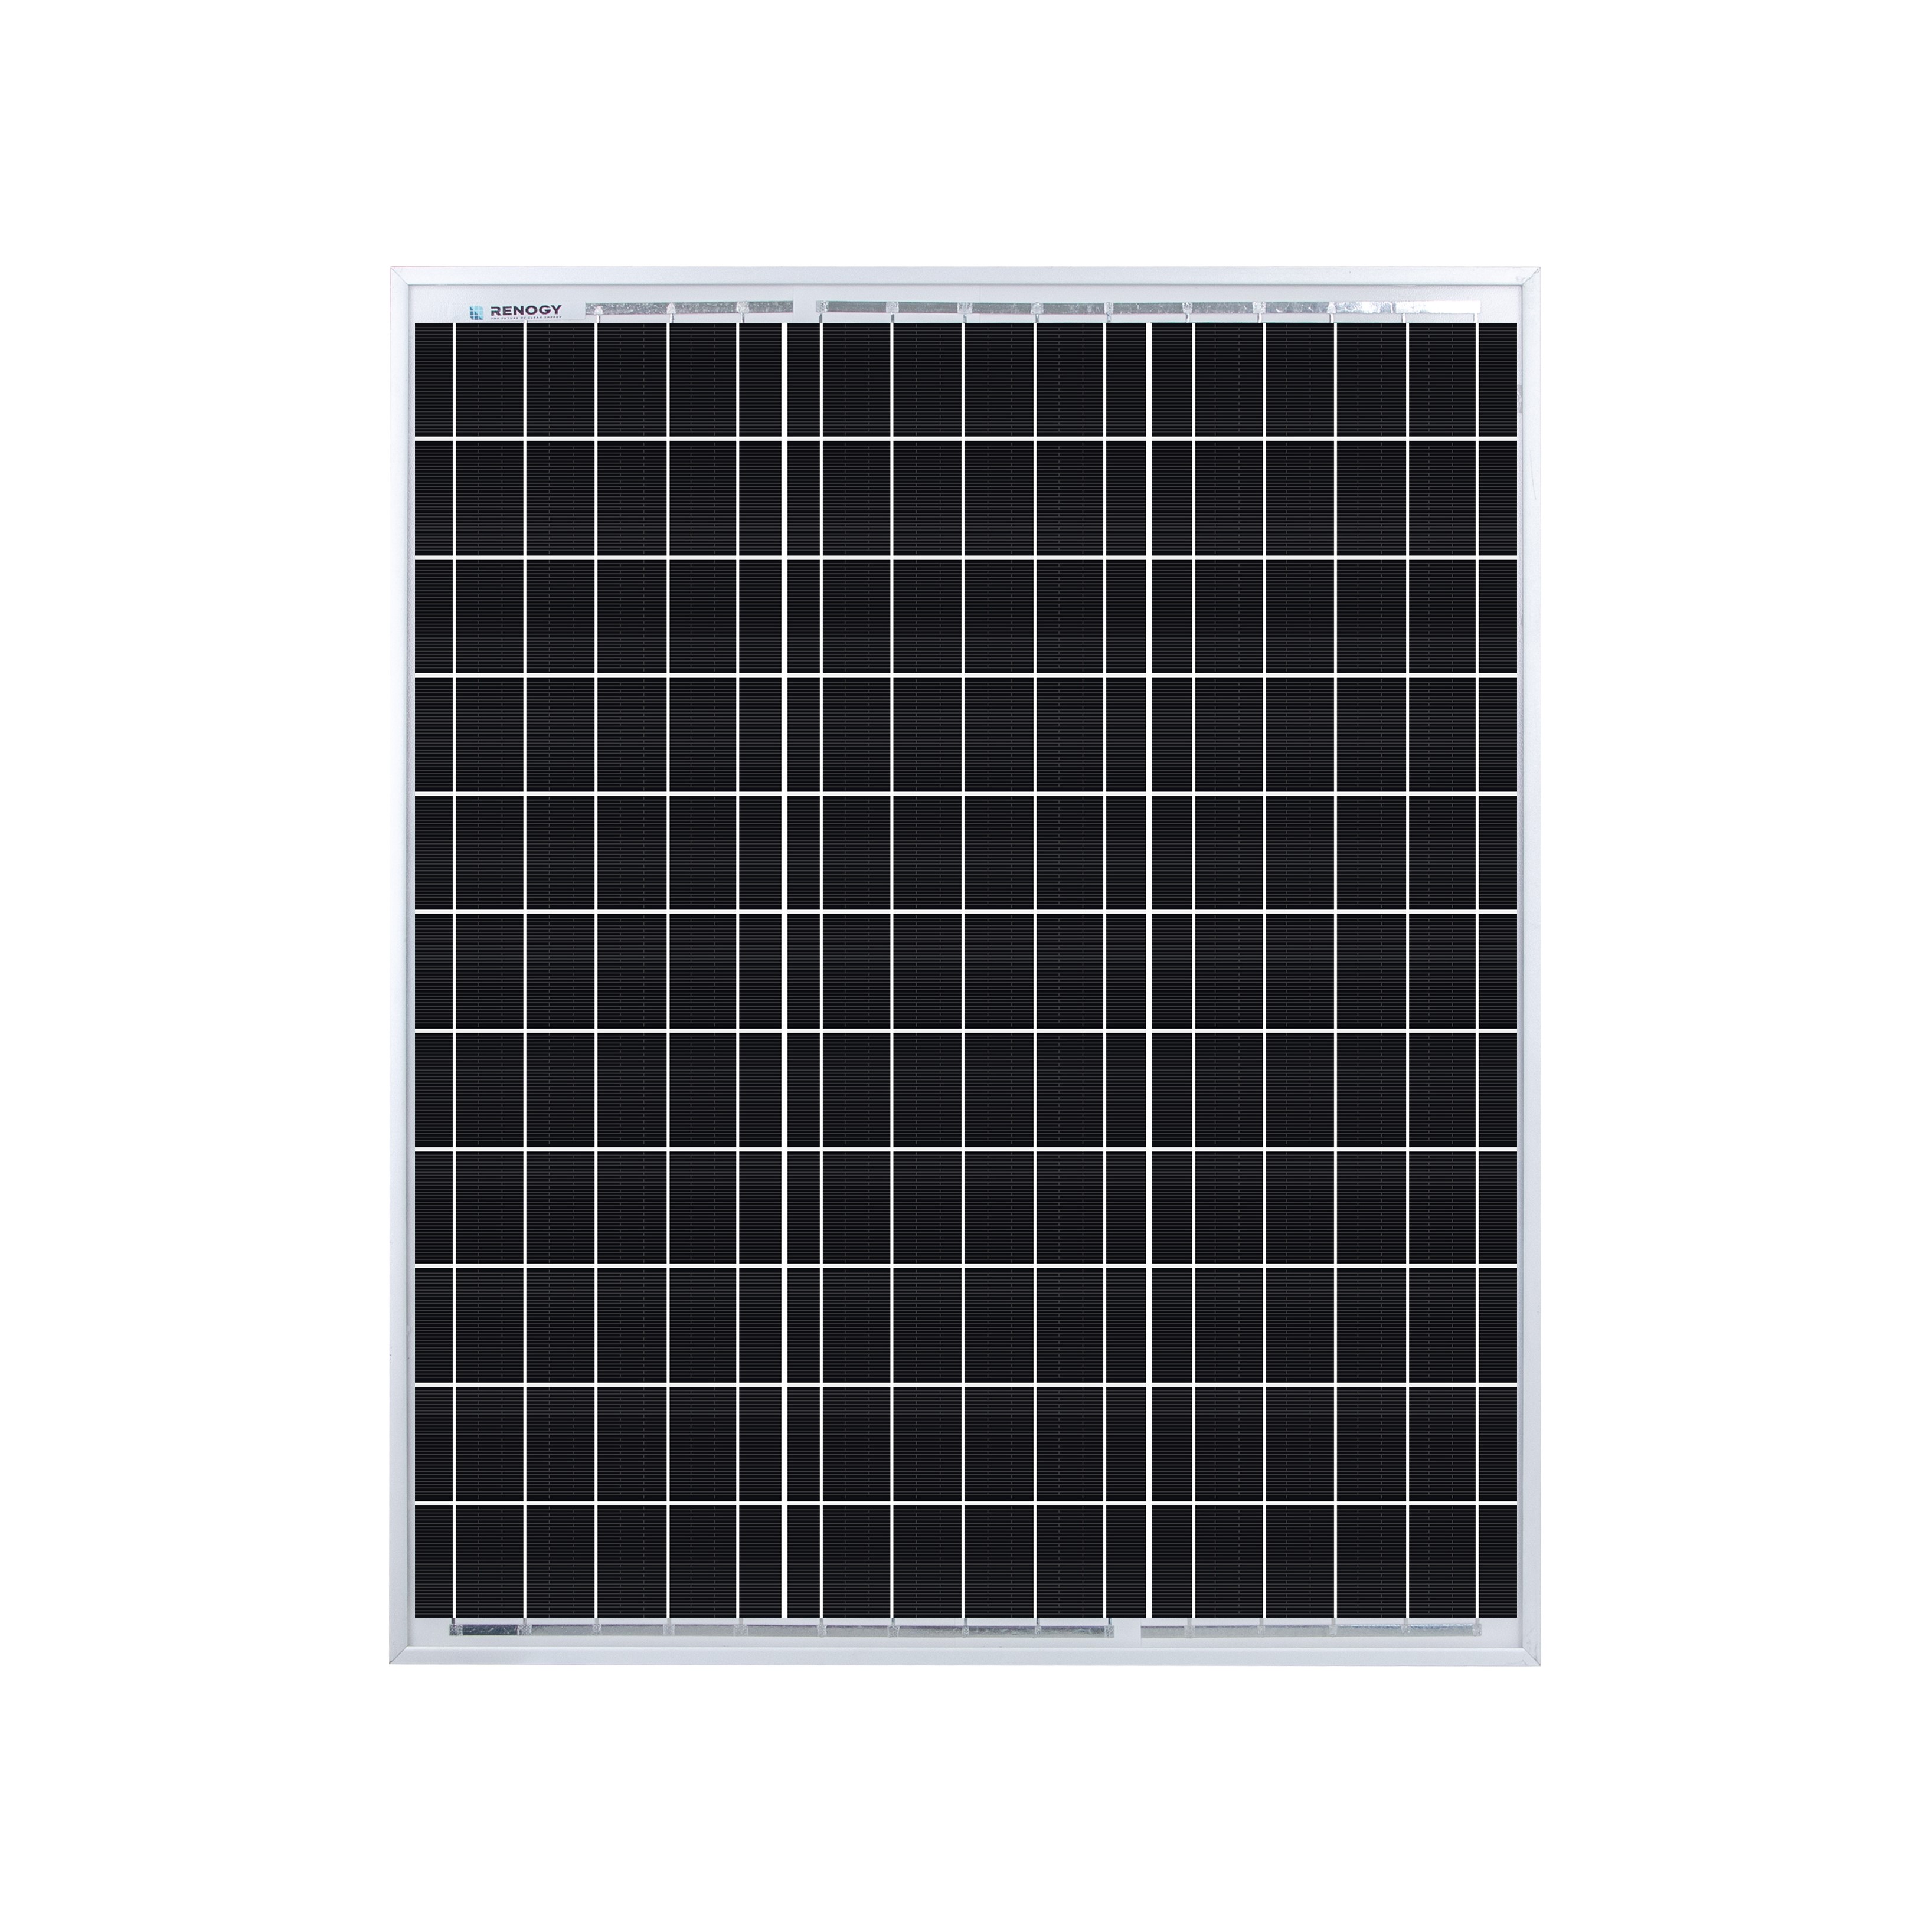 50W Mono Solar Panel